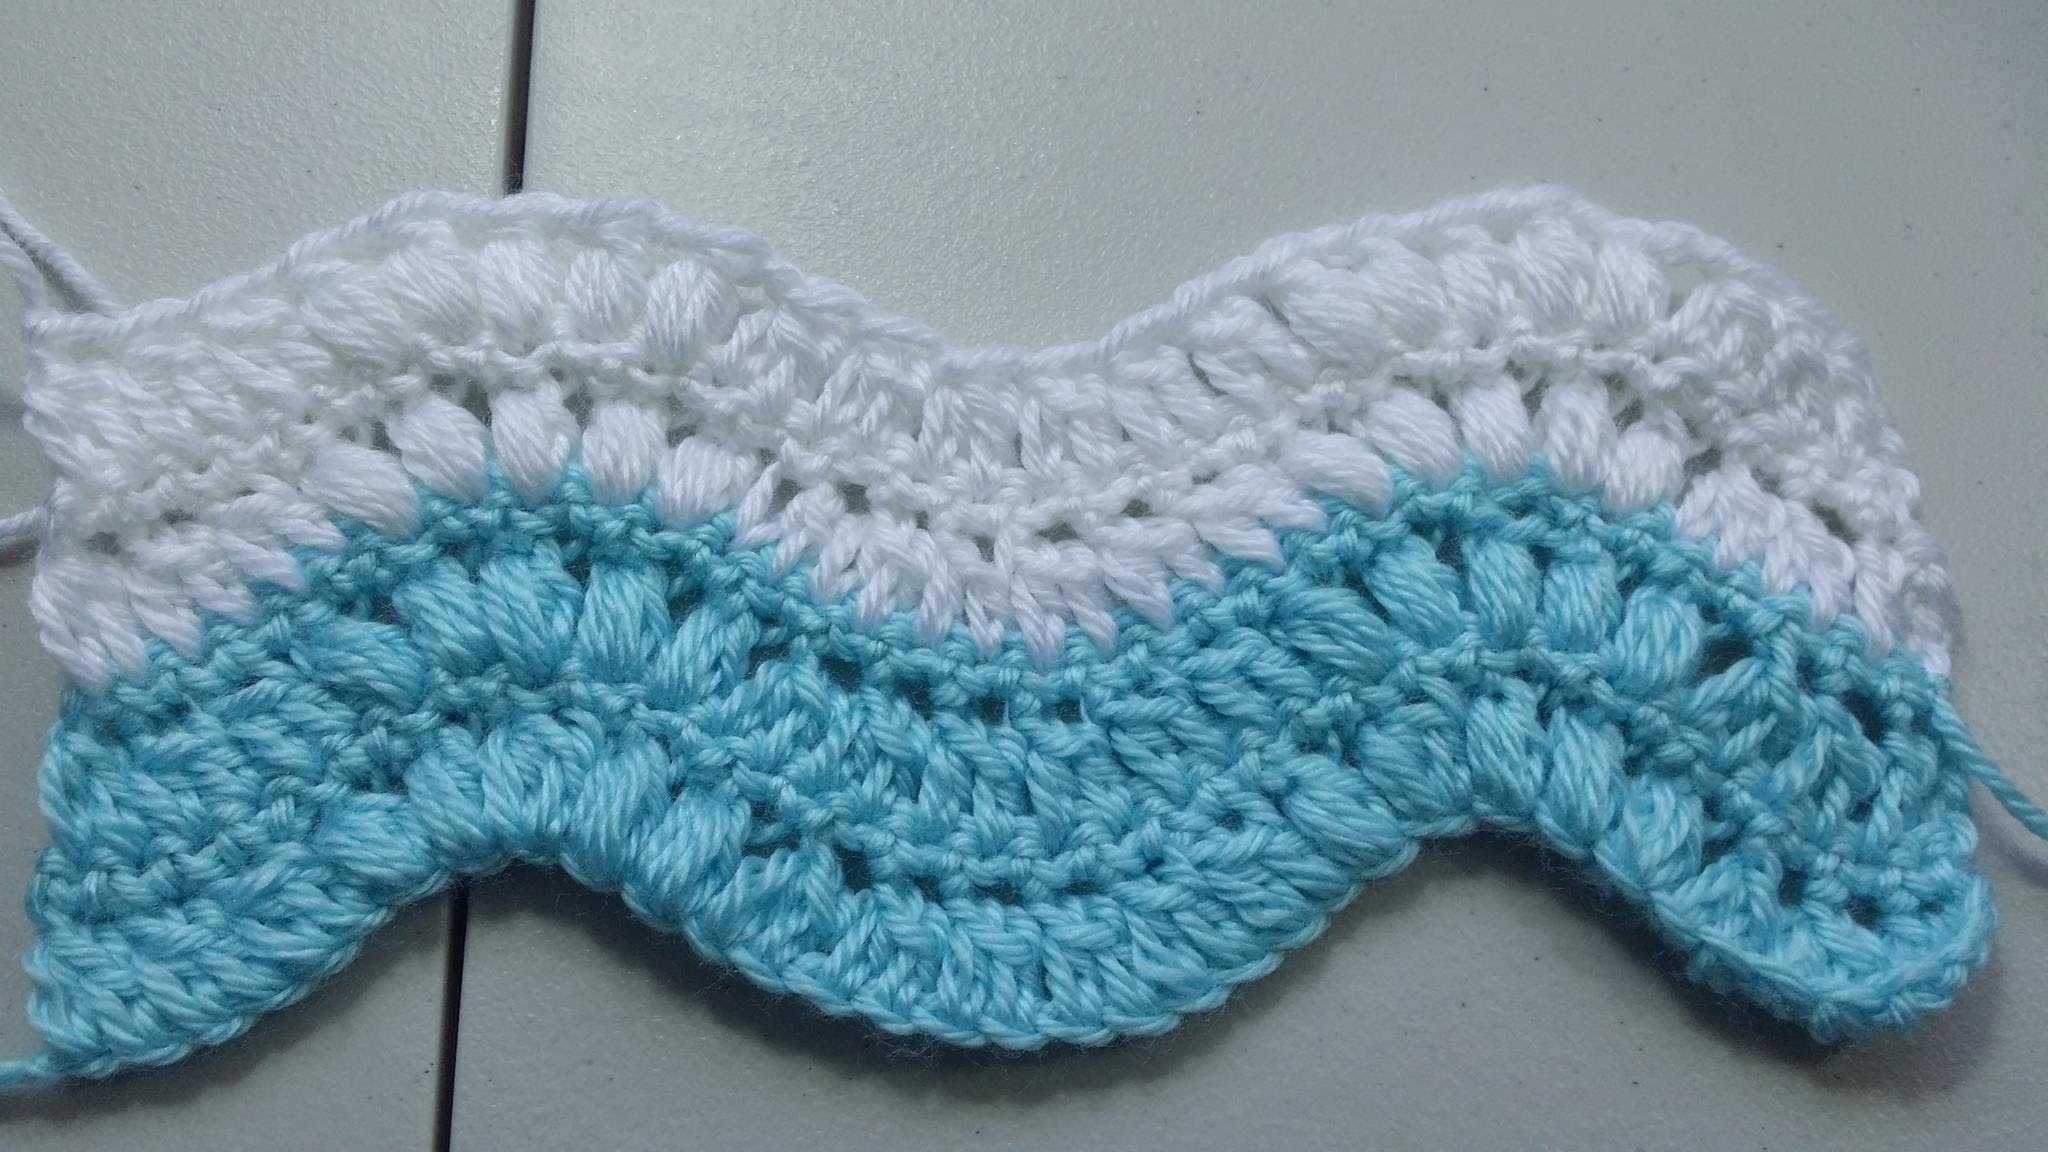 Crochet Zig Zag Pattern Crochet Stitches Video Tutorial Learn A New Stitch Crochet